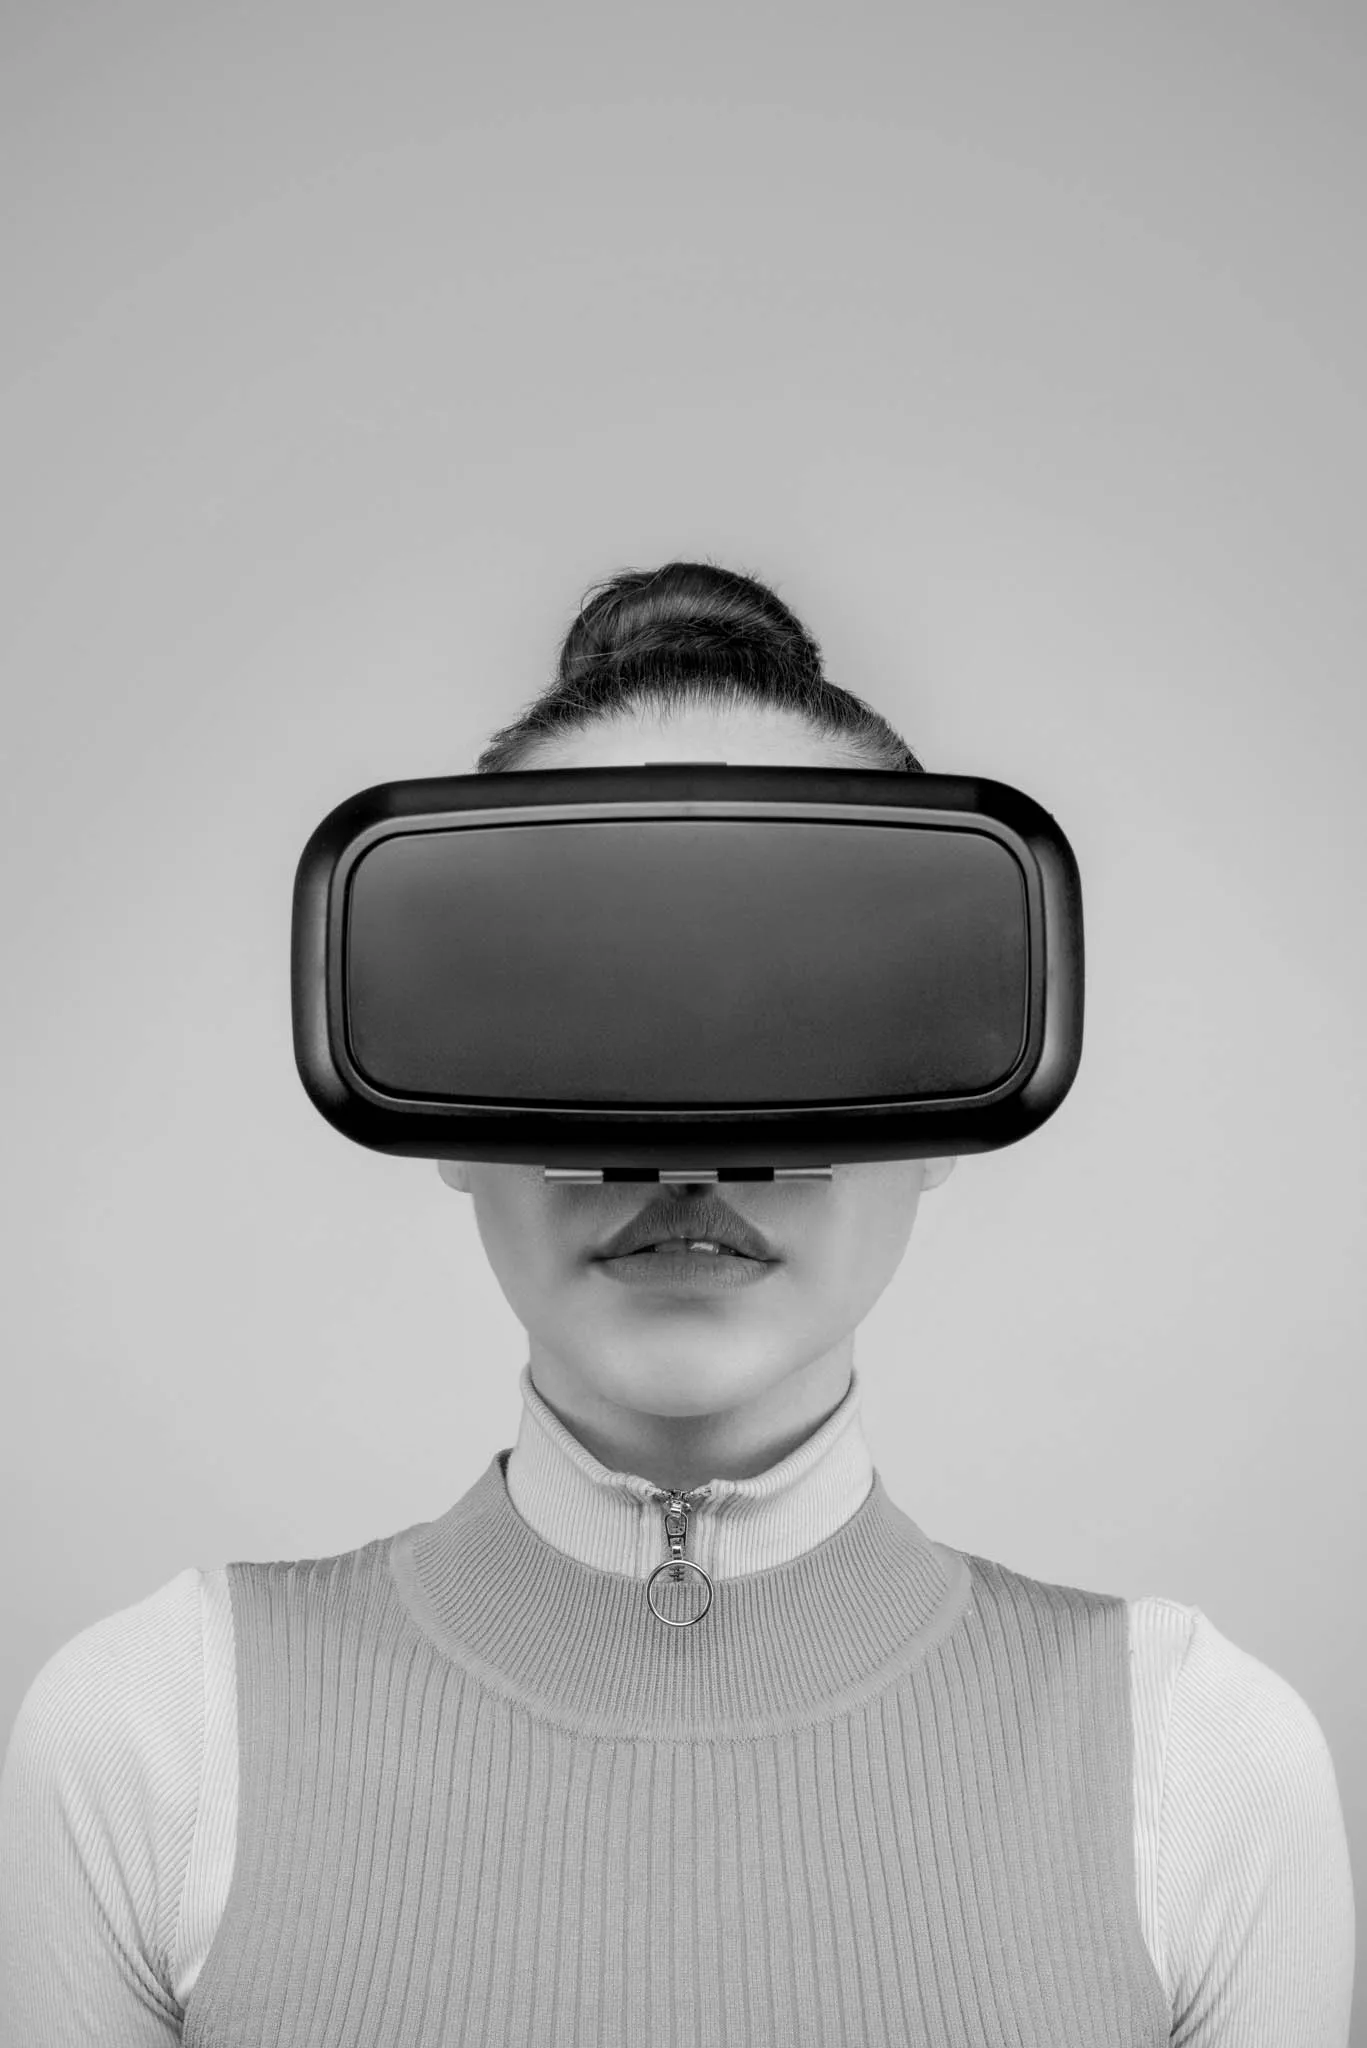 woman wearing virtual reality goggles